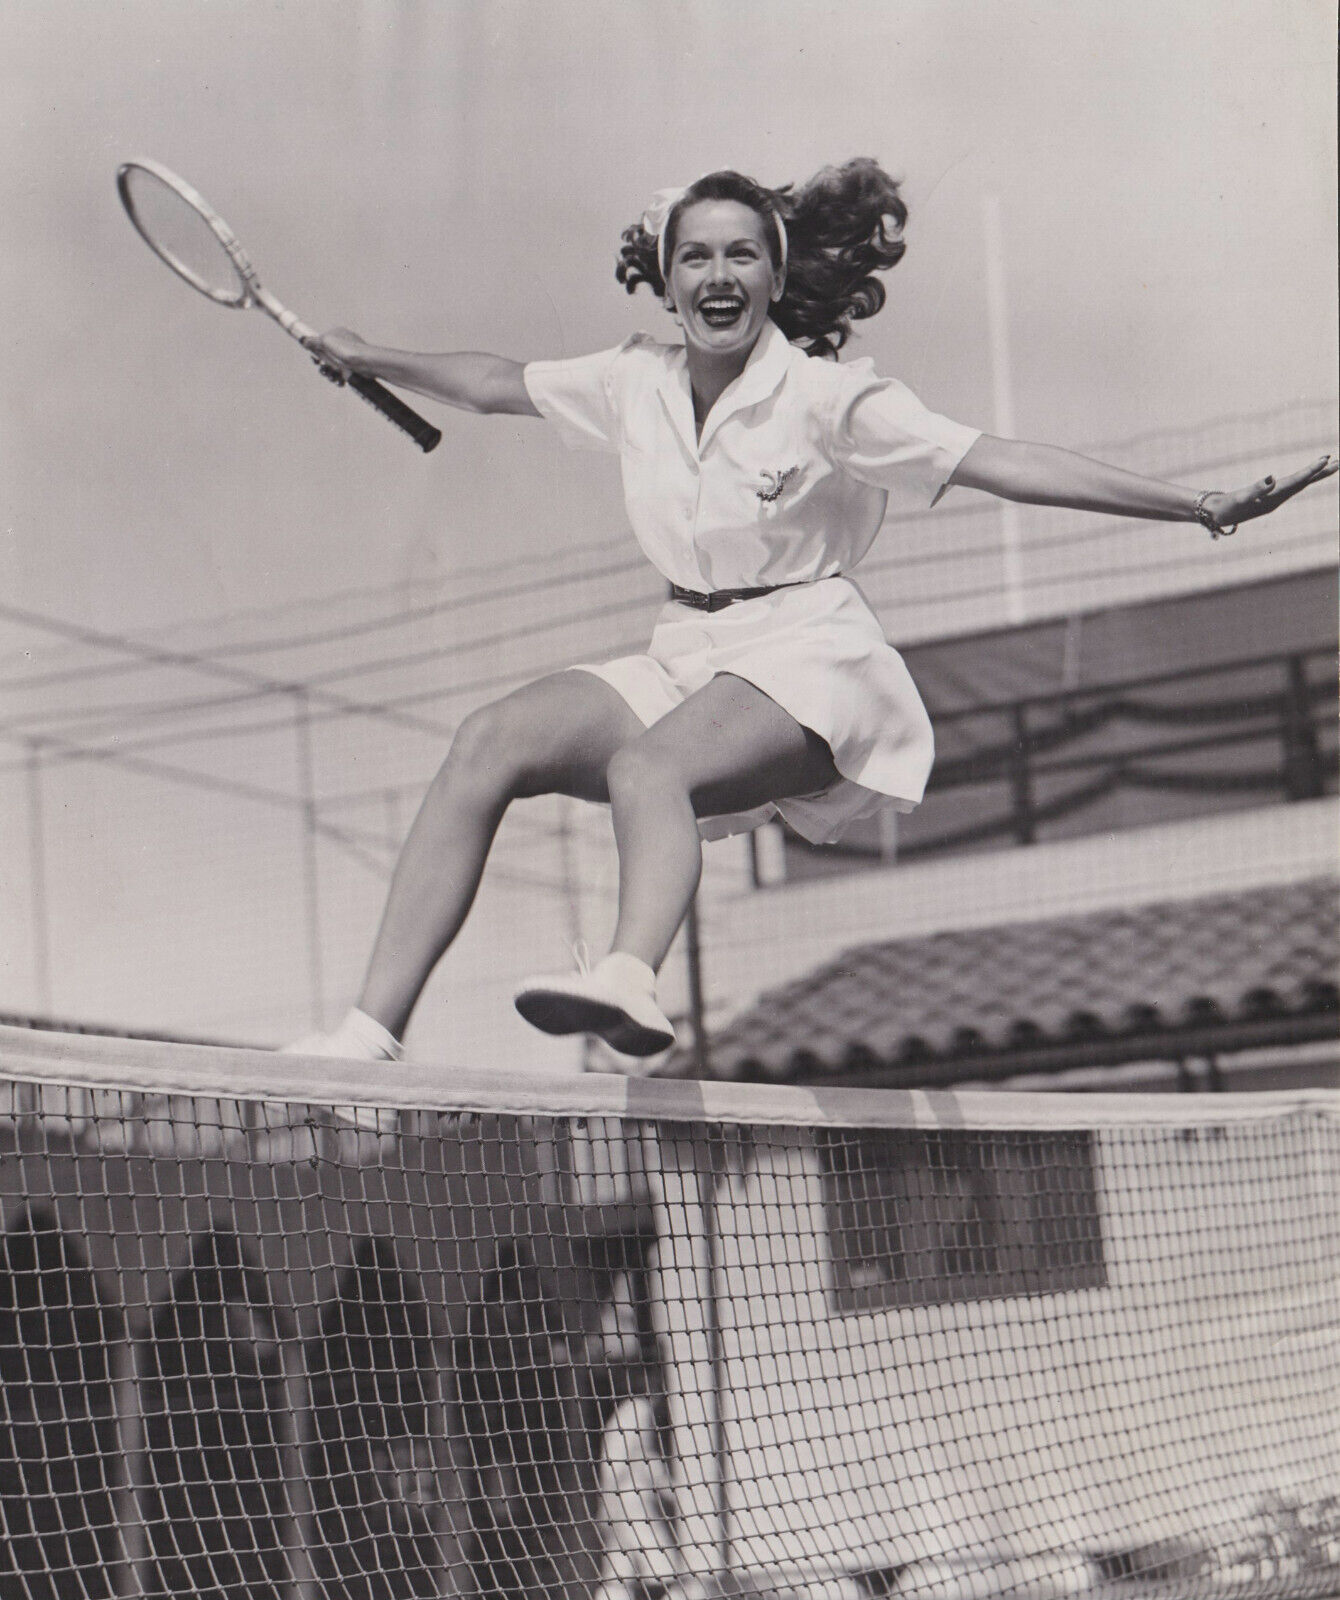 1943 Press Photo Beautiful Actress Jinx Falkenburg Jumping Over a Tennis Net